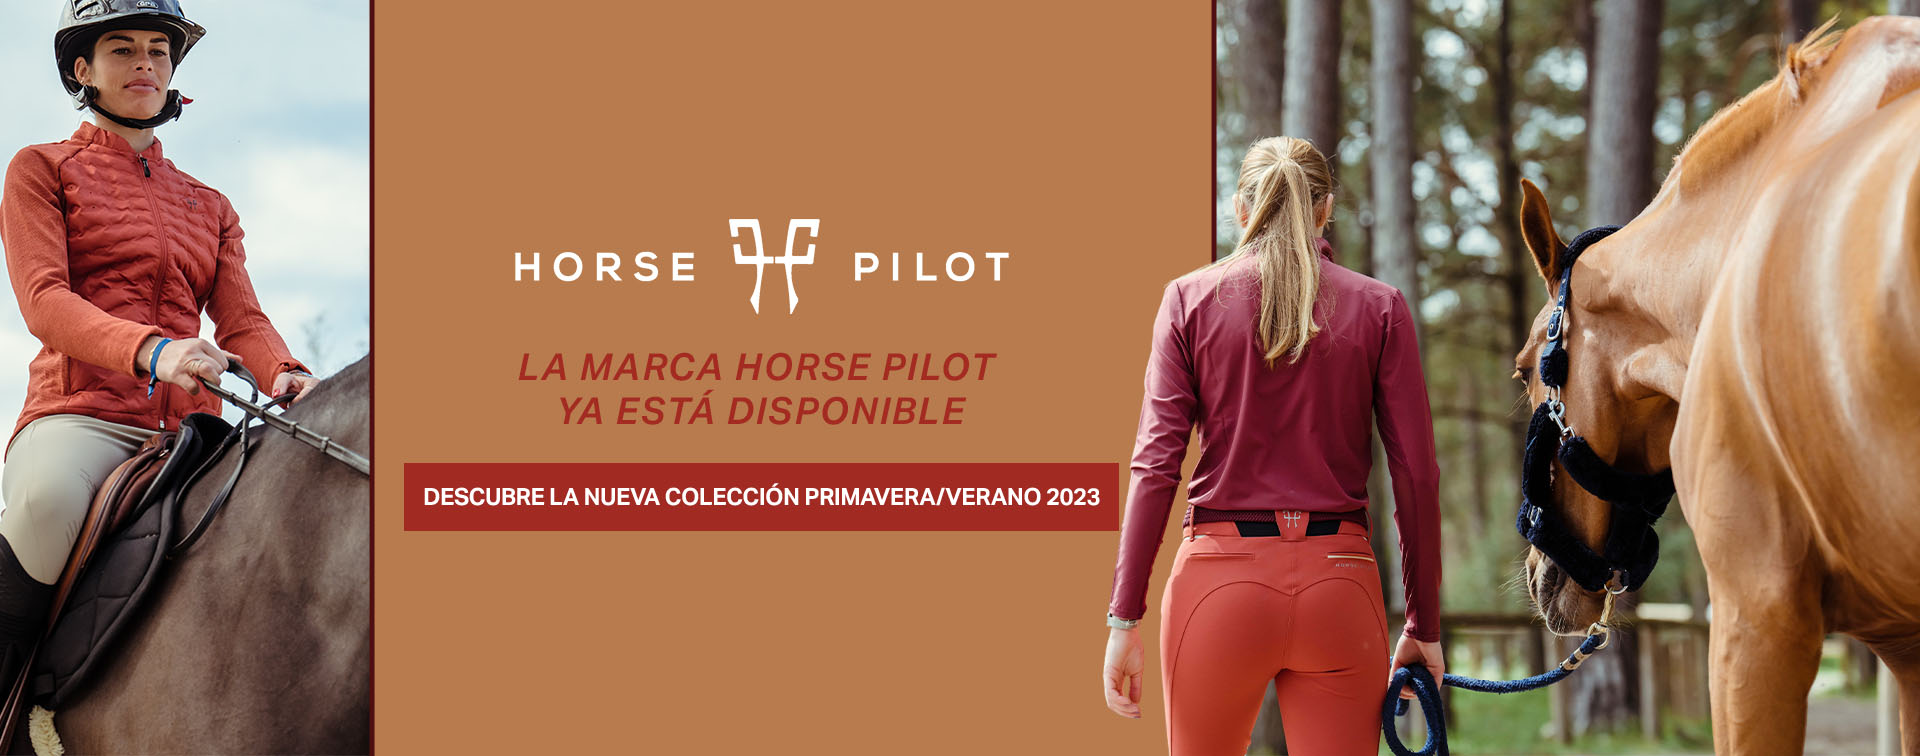 Horse Pilot